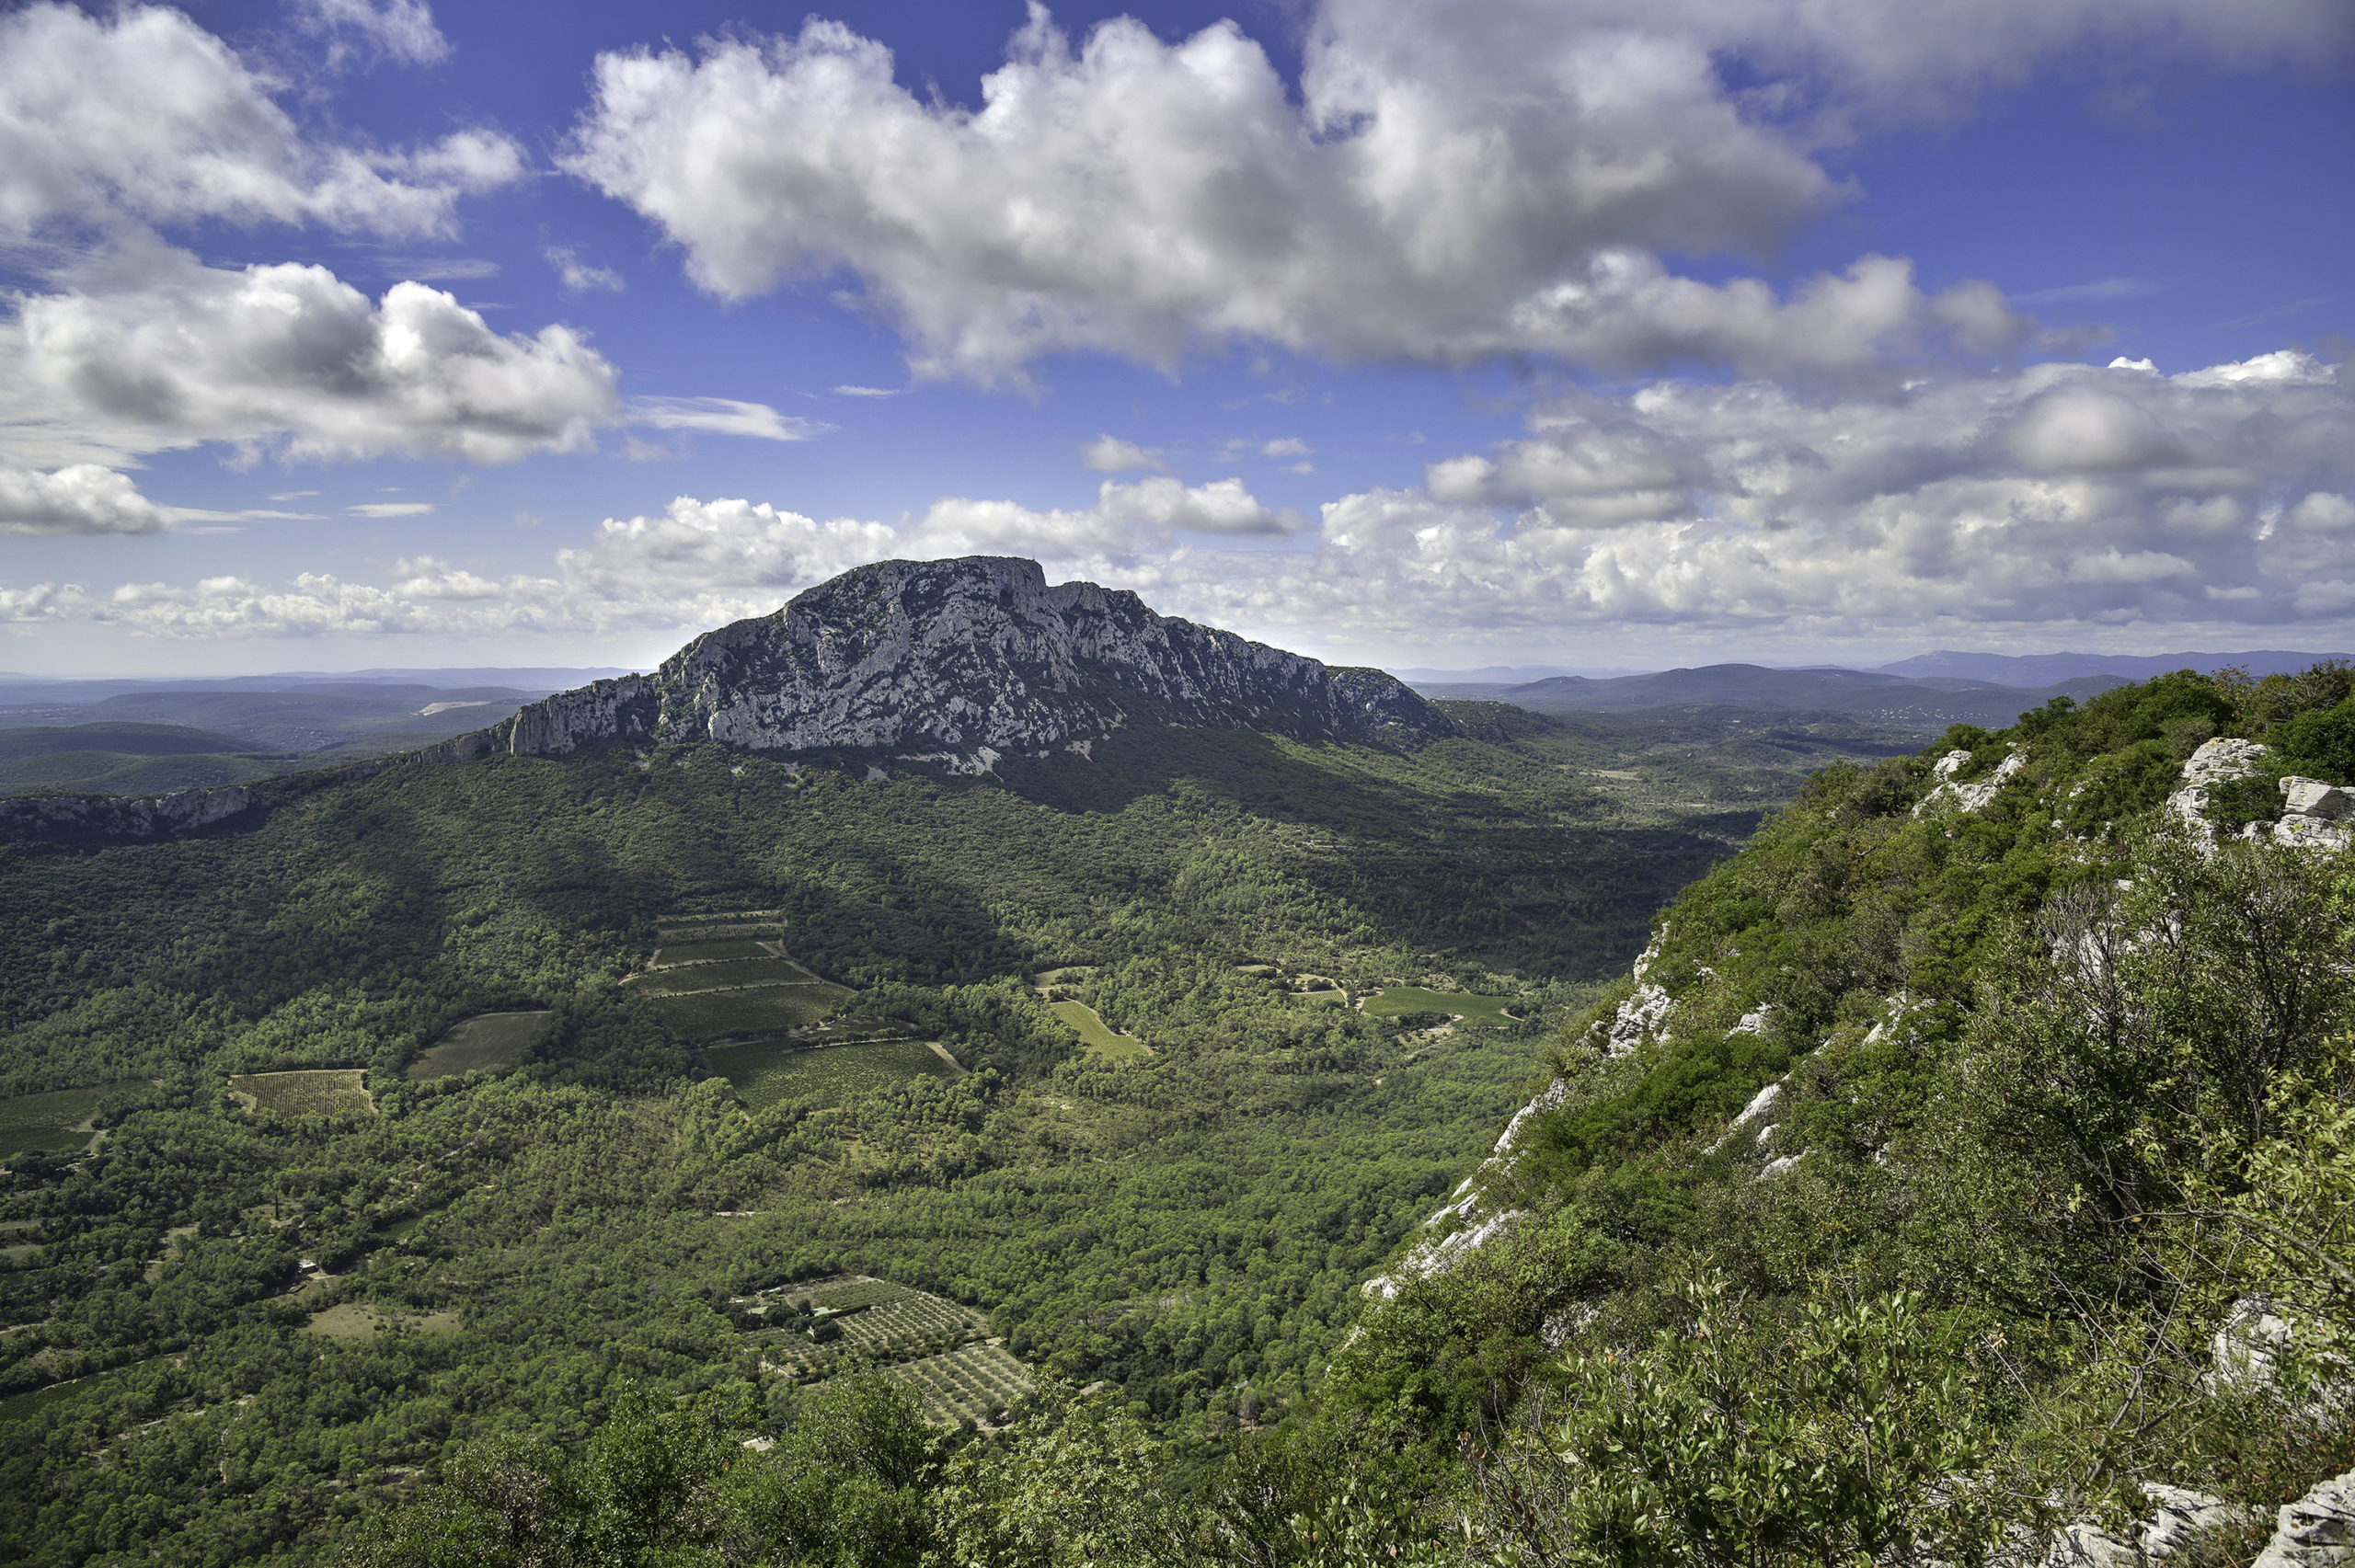 Le Pic Saint-Loup vu depuis l'Hortus. Photo : Emmanuel Perrin